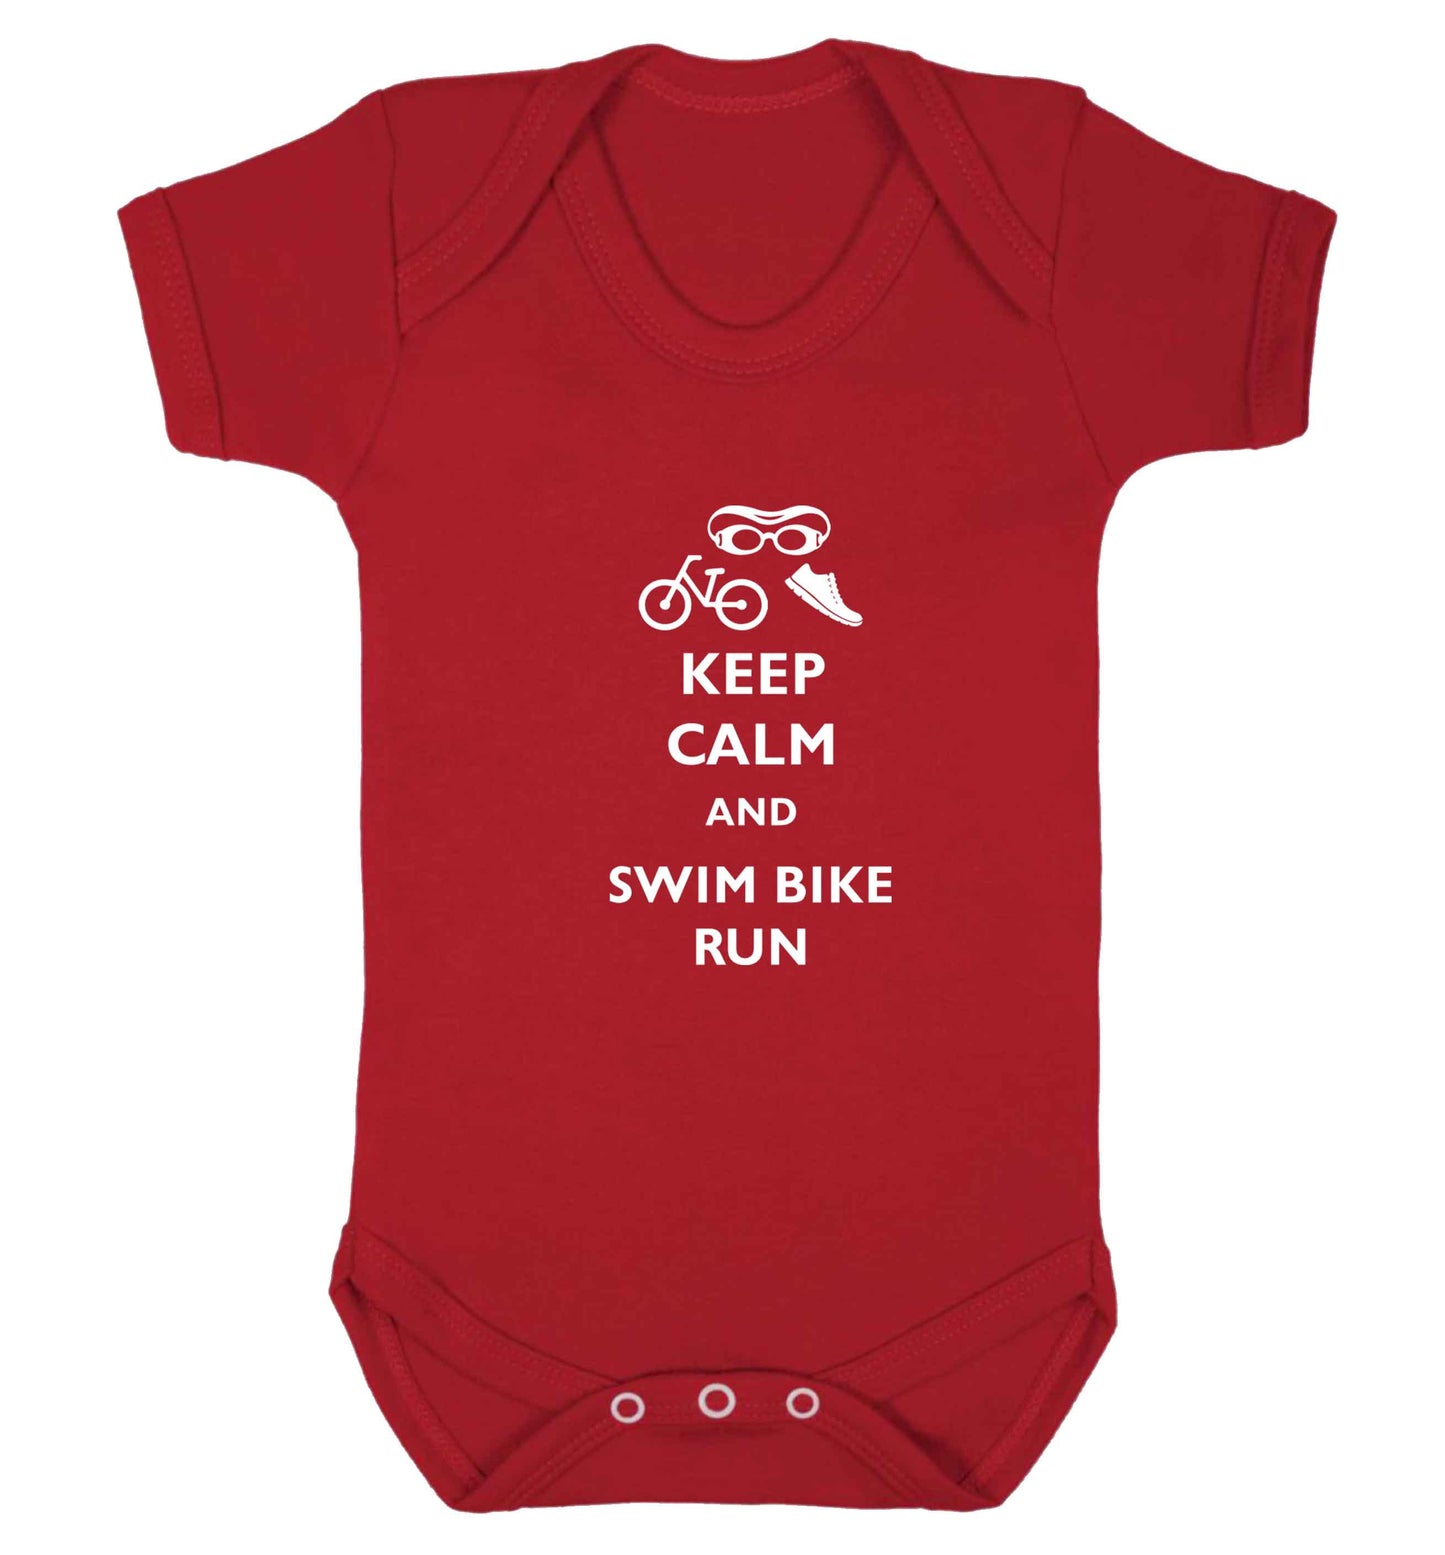 Keep calm and swim bike run baby vest red 18-24 months